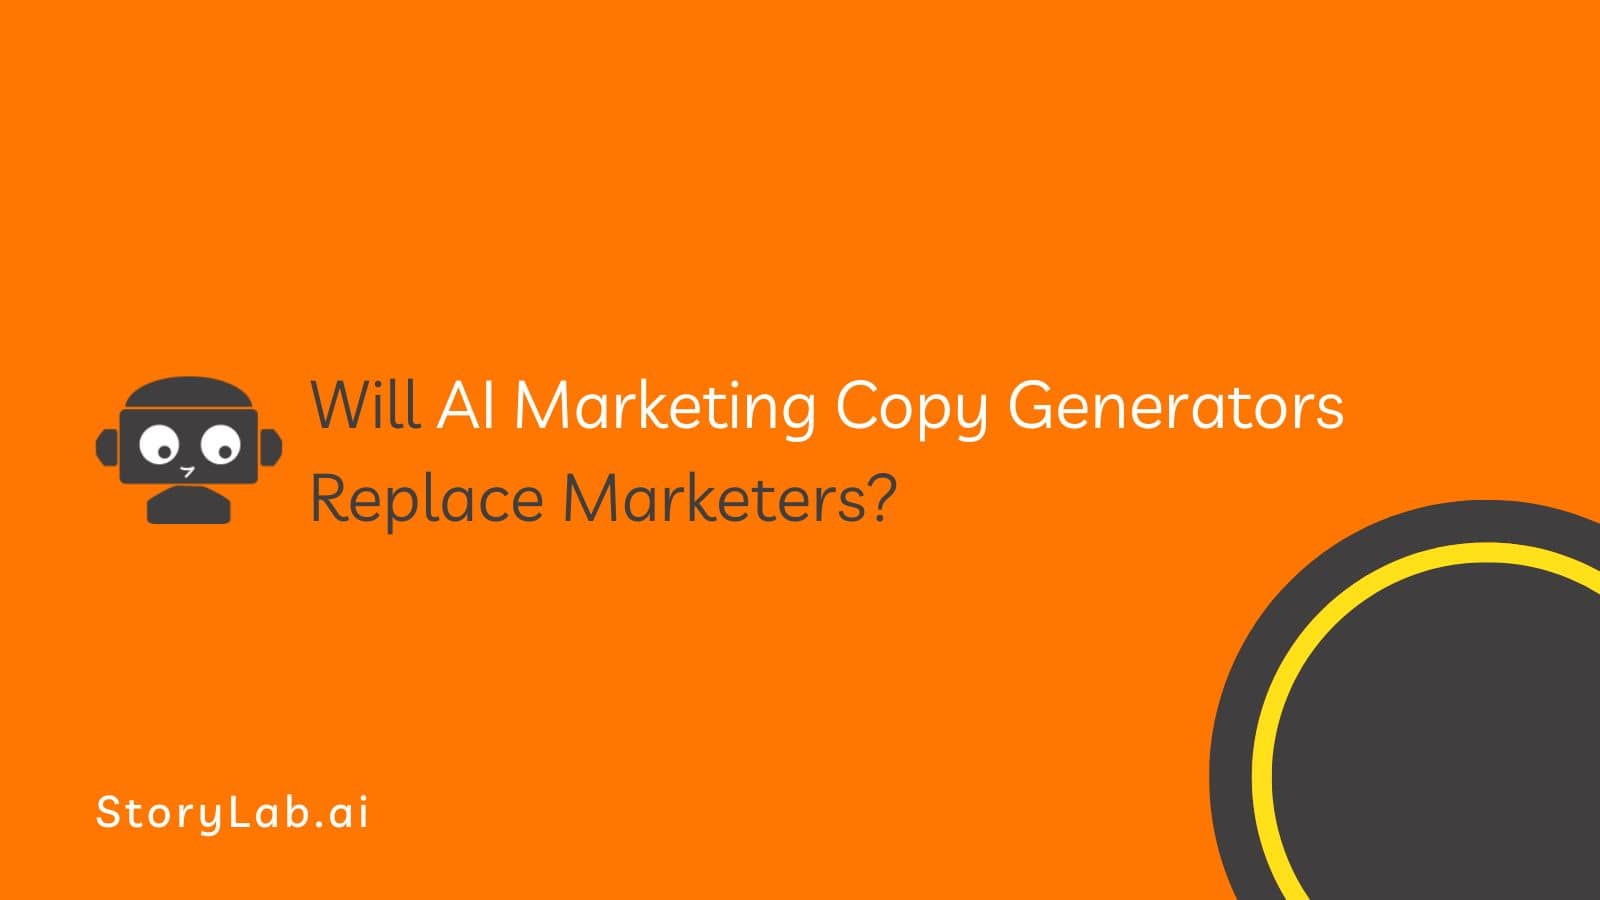 Will AI Marketing Copy Generators Replace Marketers